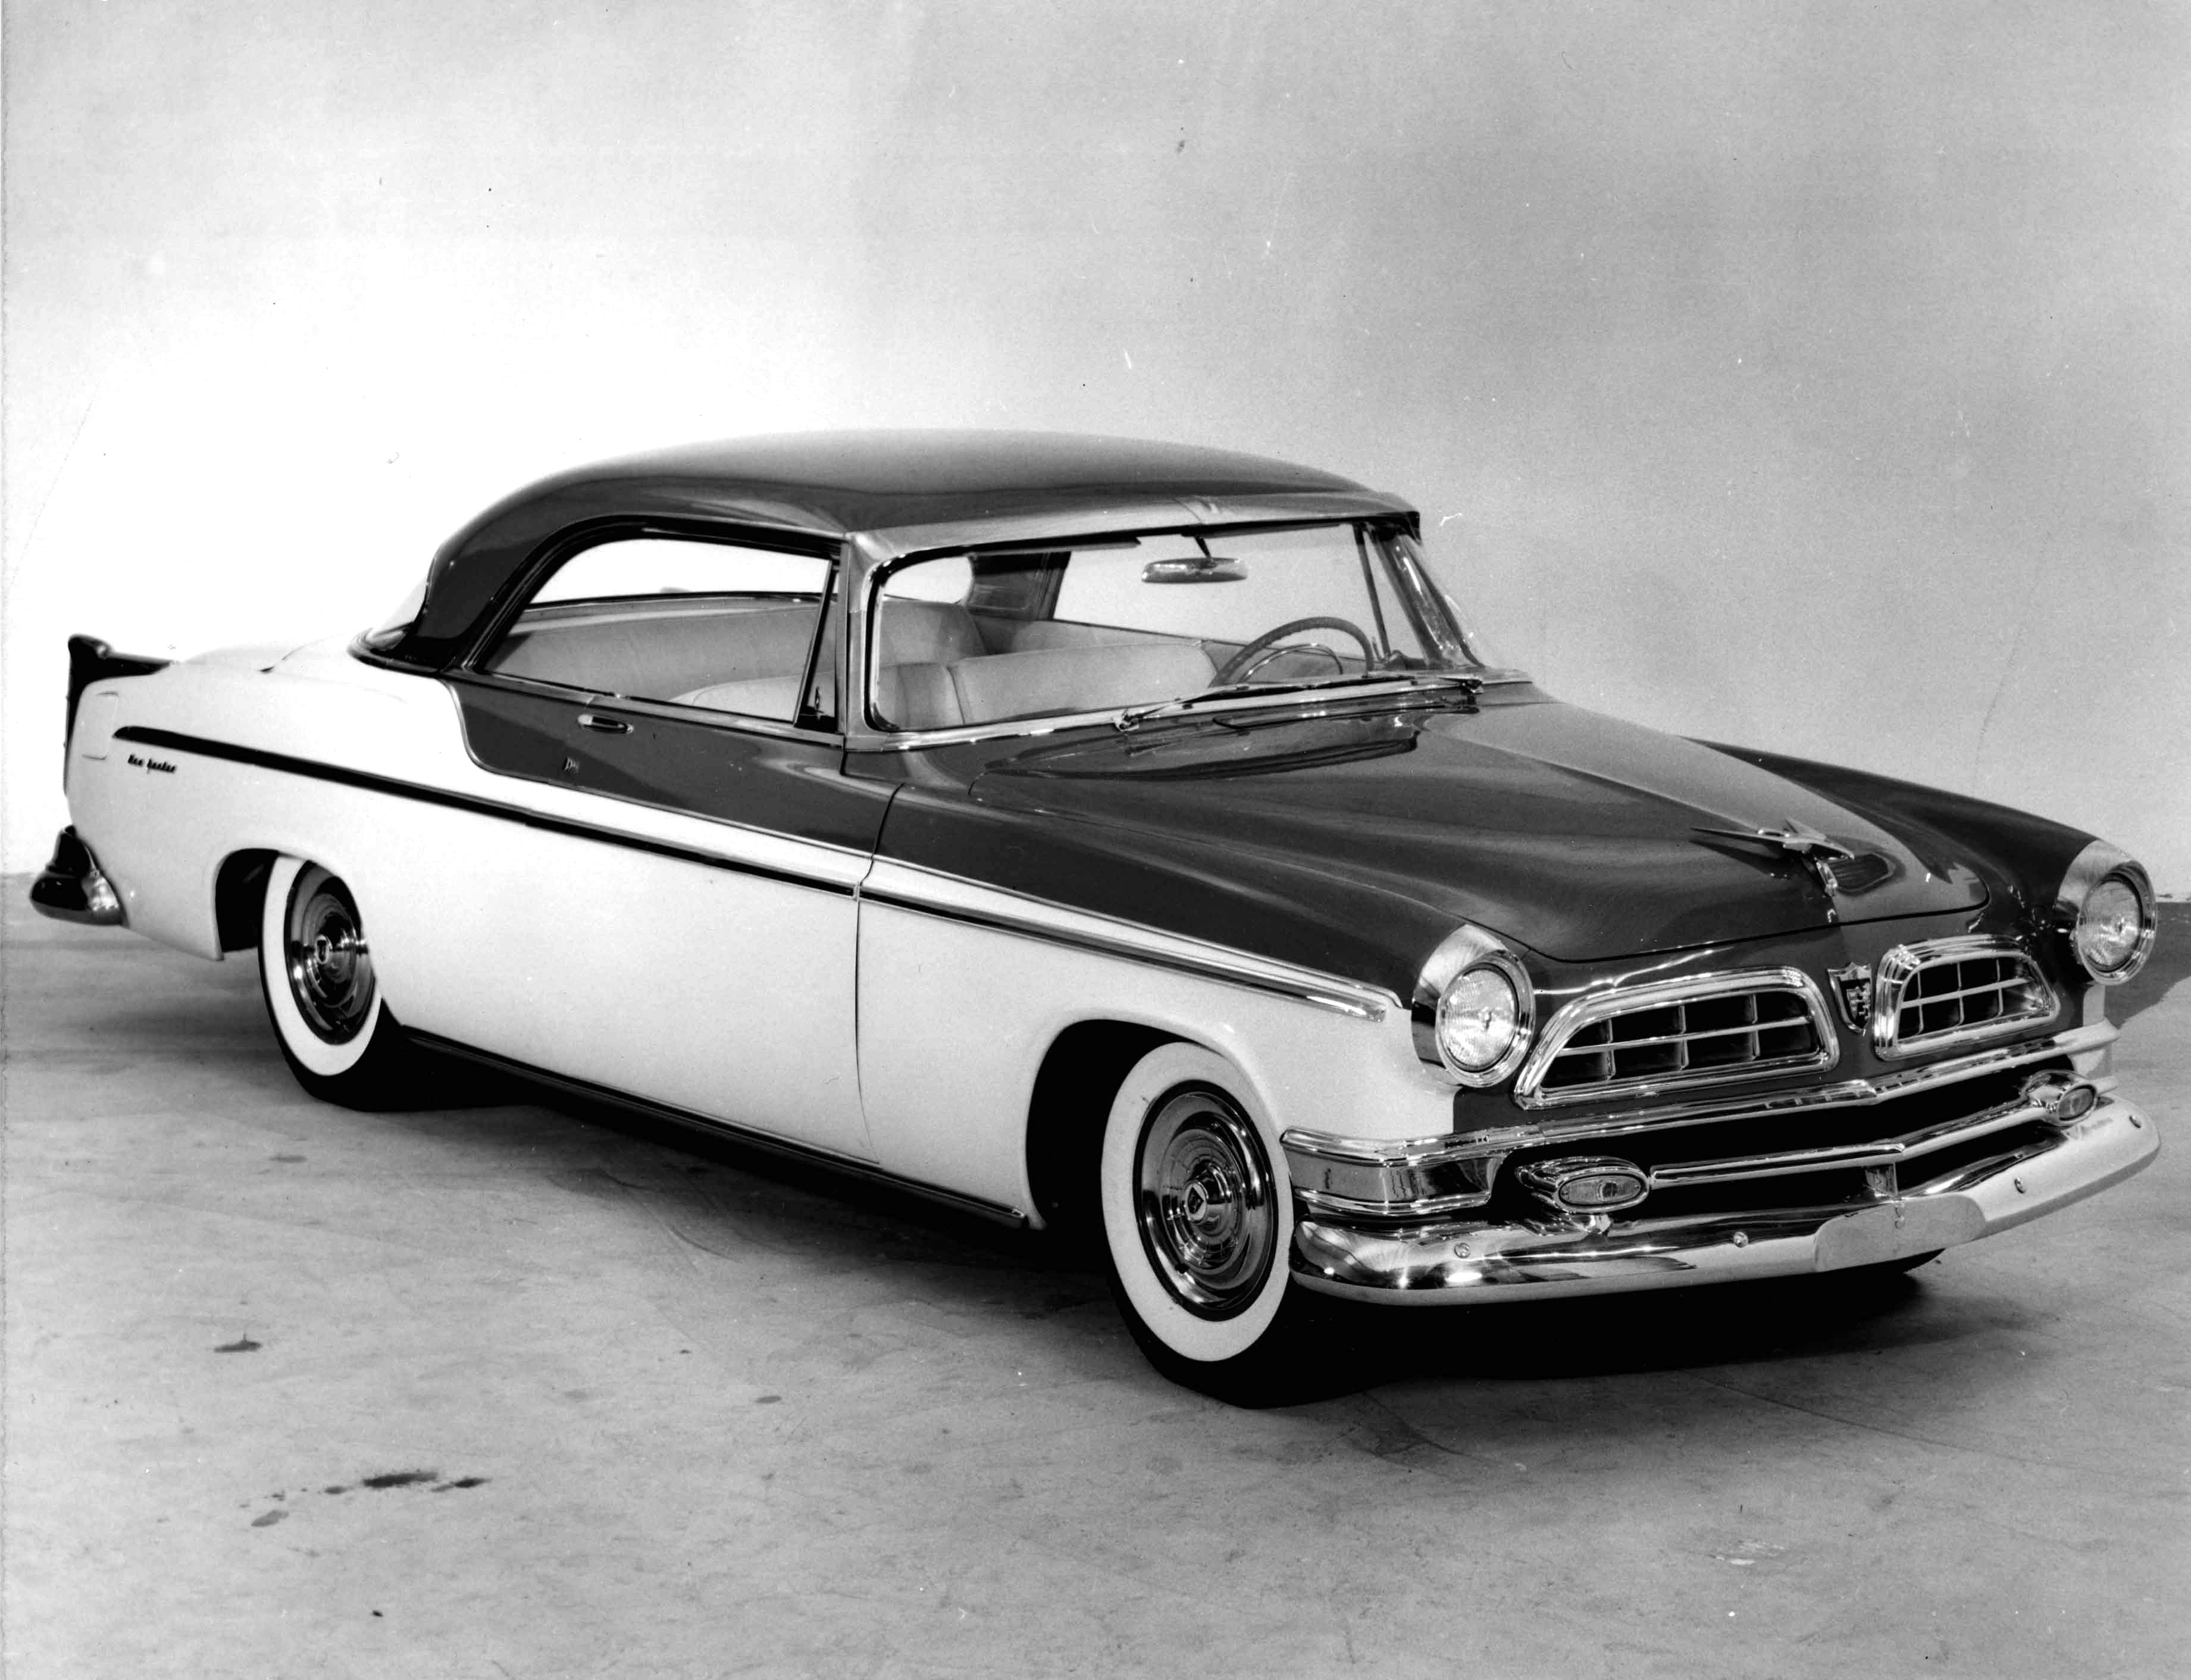 1955 Chrysler New Yorker DeLuxe Newport